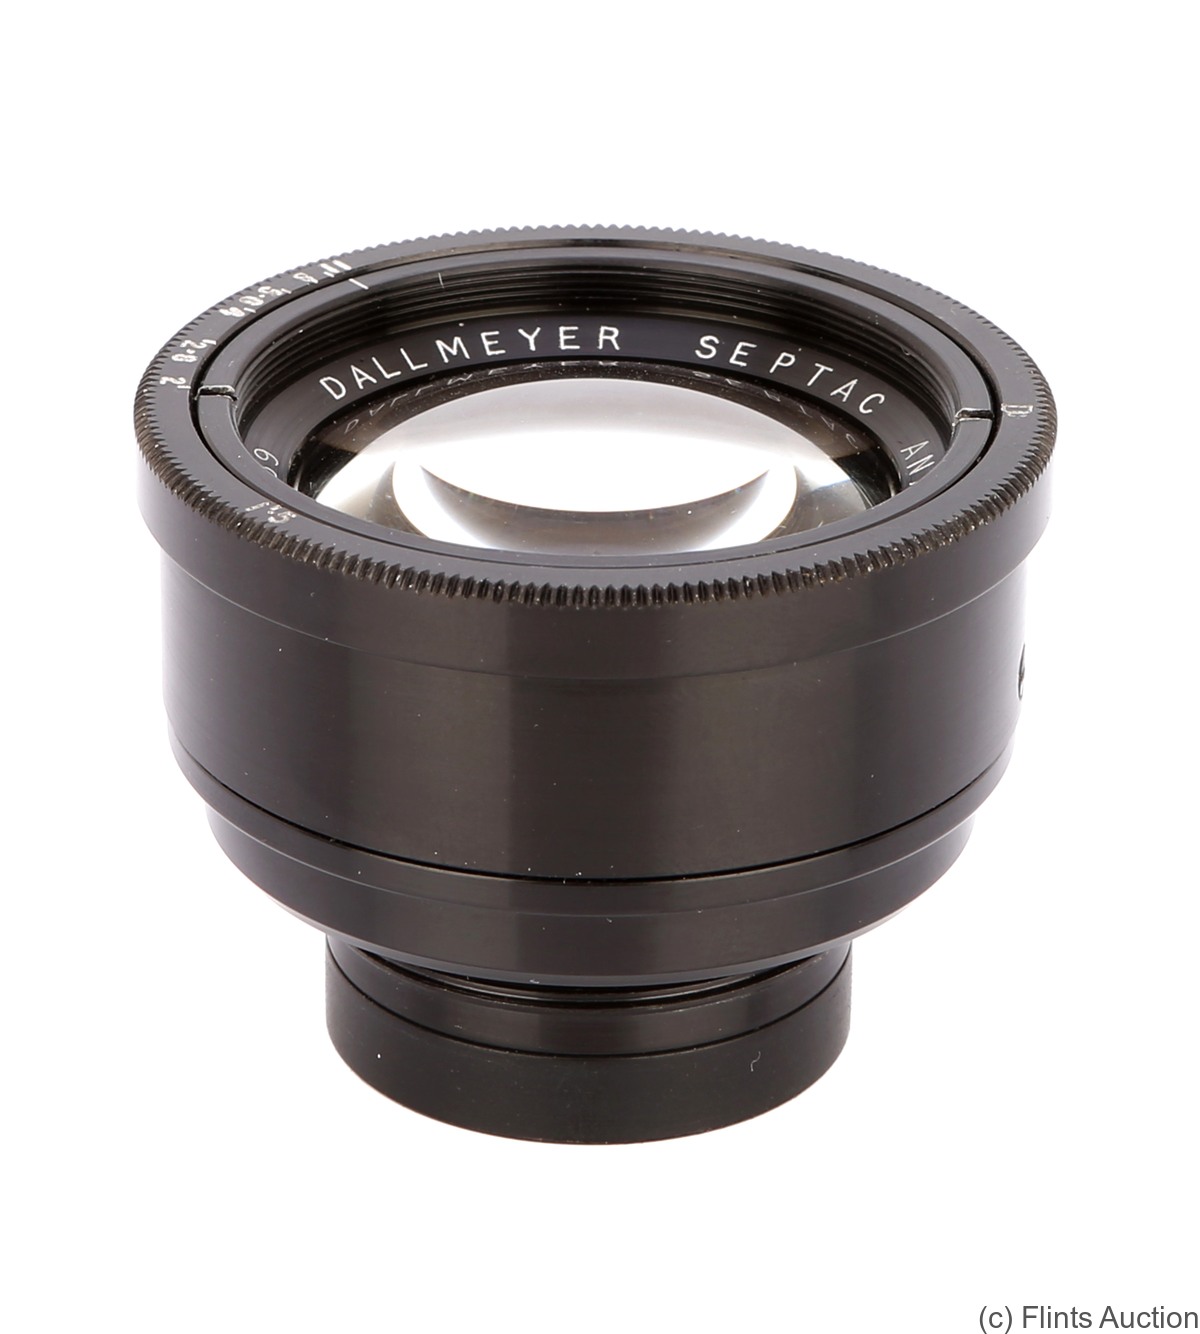 Dallmeyer: 2in f1.5 Septac Anastigmat (black, 35mm) camera